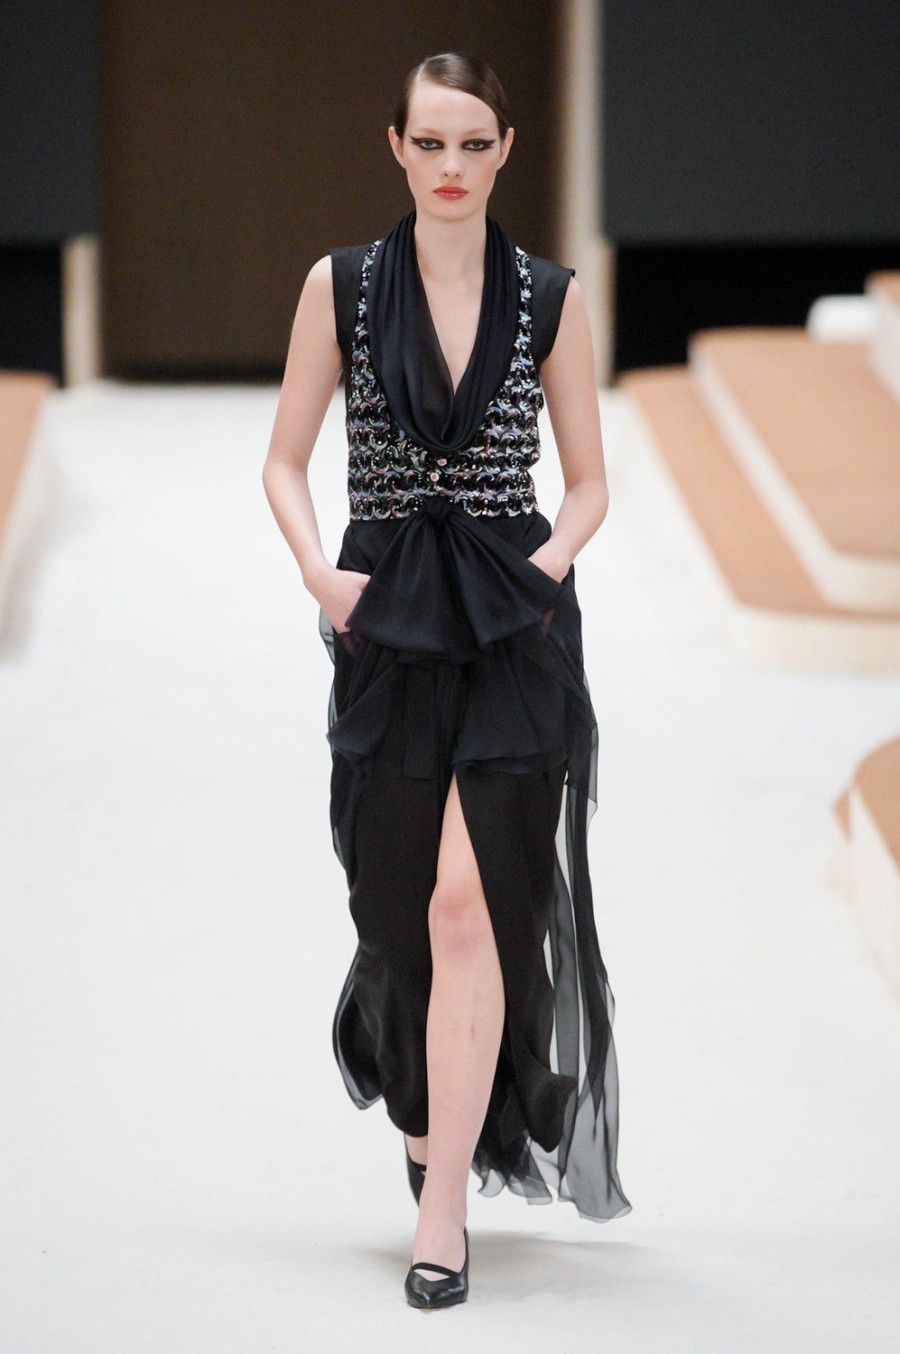 Chanel SS22 Haute Couture: Η Charlotte Casiraghi άνοιξε το show πάνω σε άλογο - Φωτογραφία 34